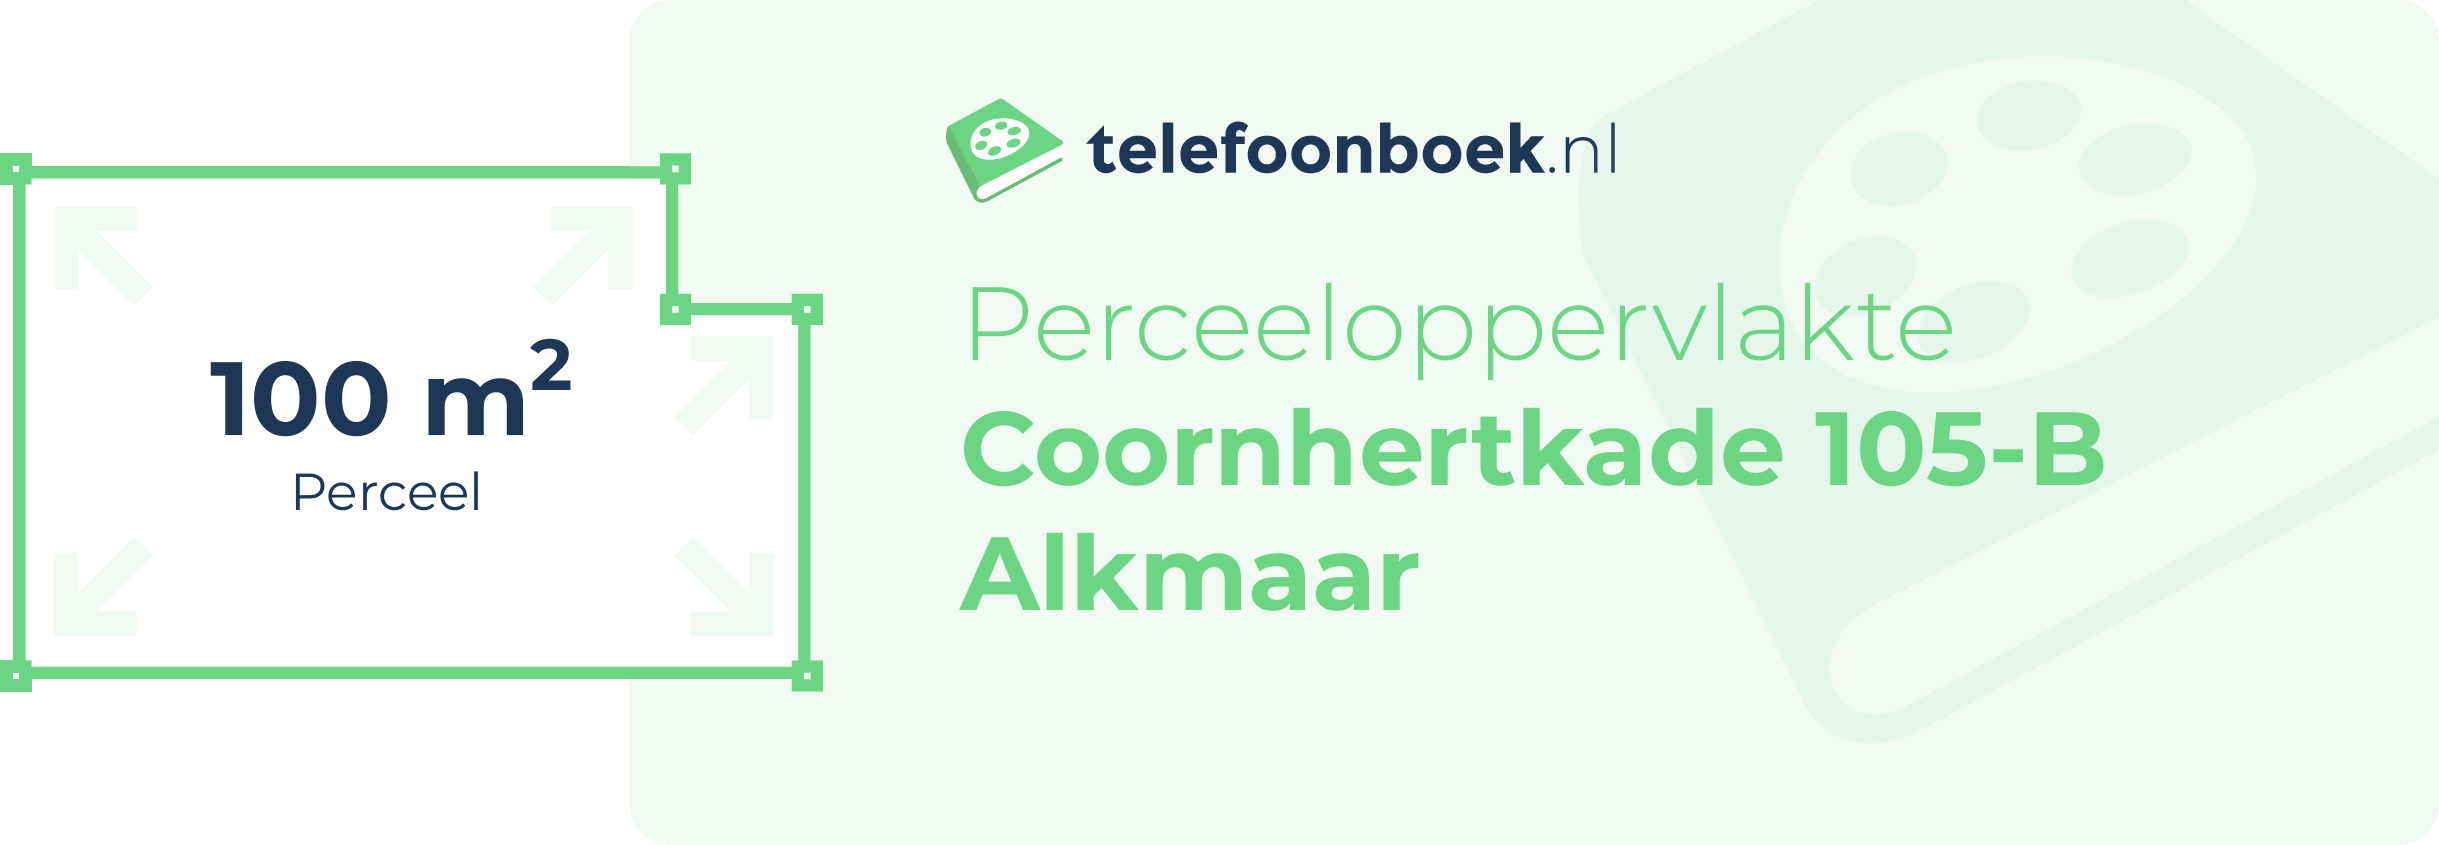 Perceeloppervlakte Coornhertkade 105-B Alkmaar